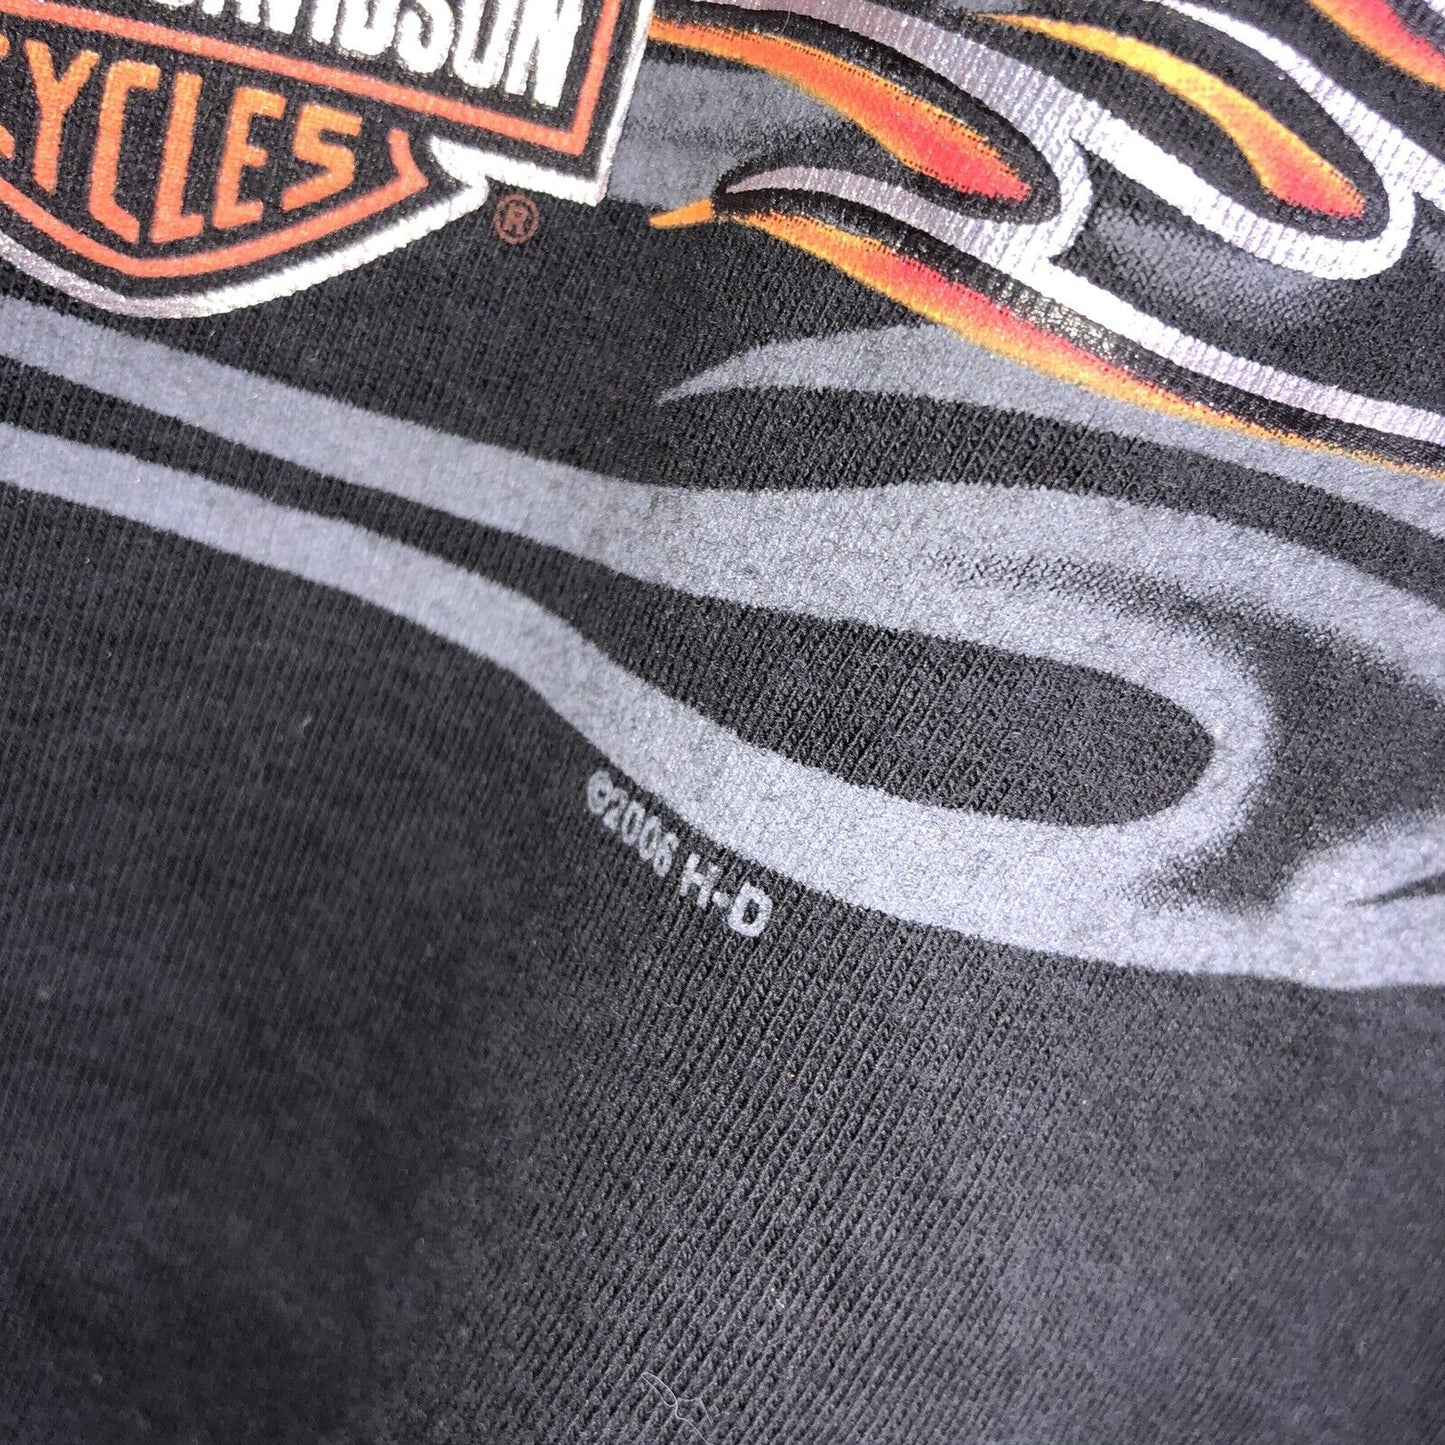 2006 Harley Davidson HD Ohio T shirt Mens size Large